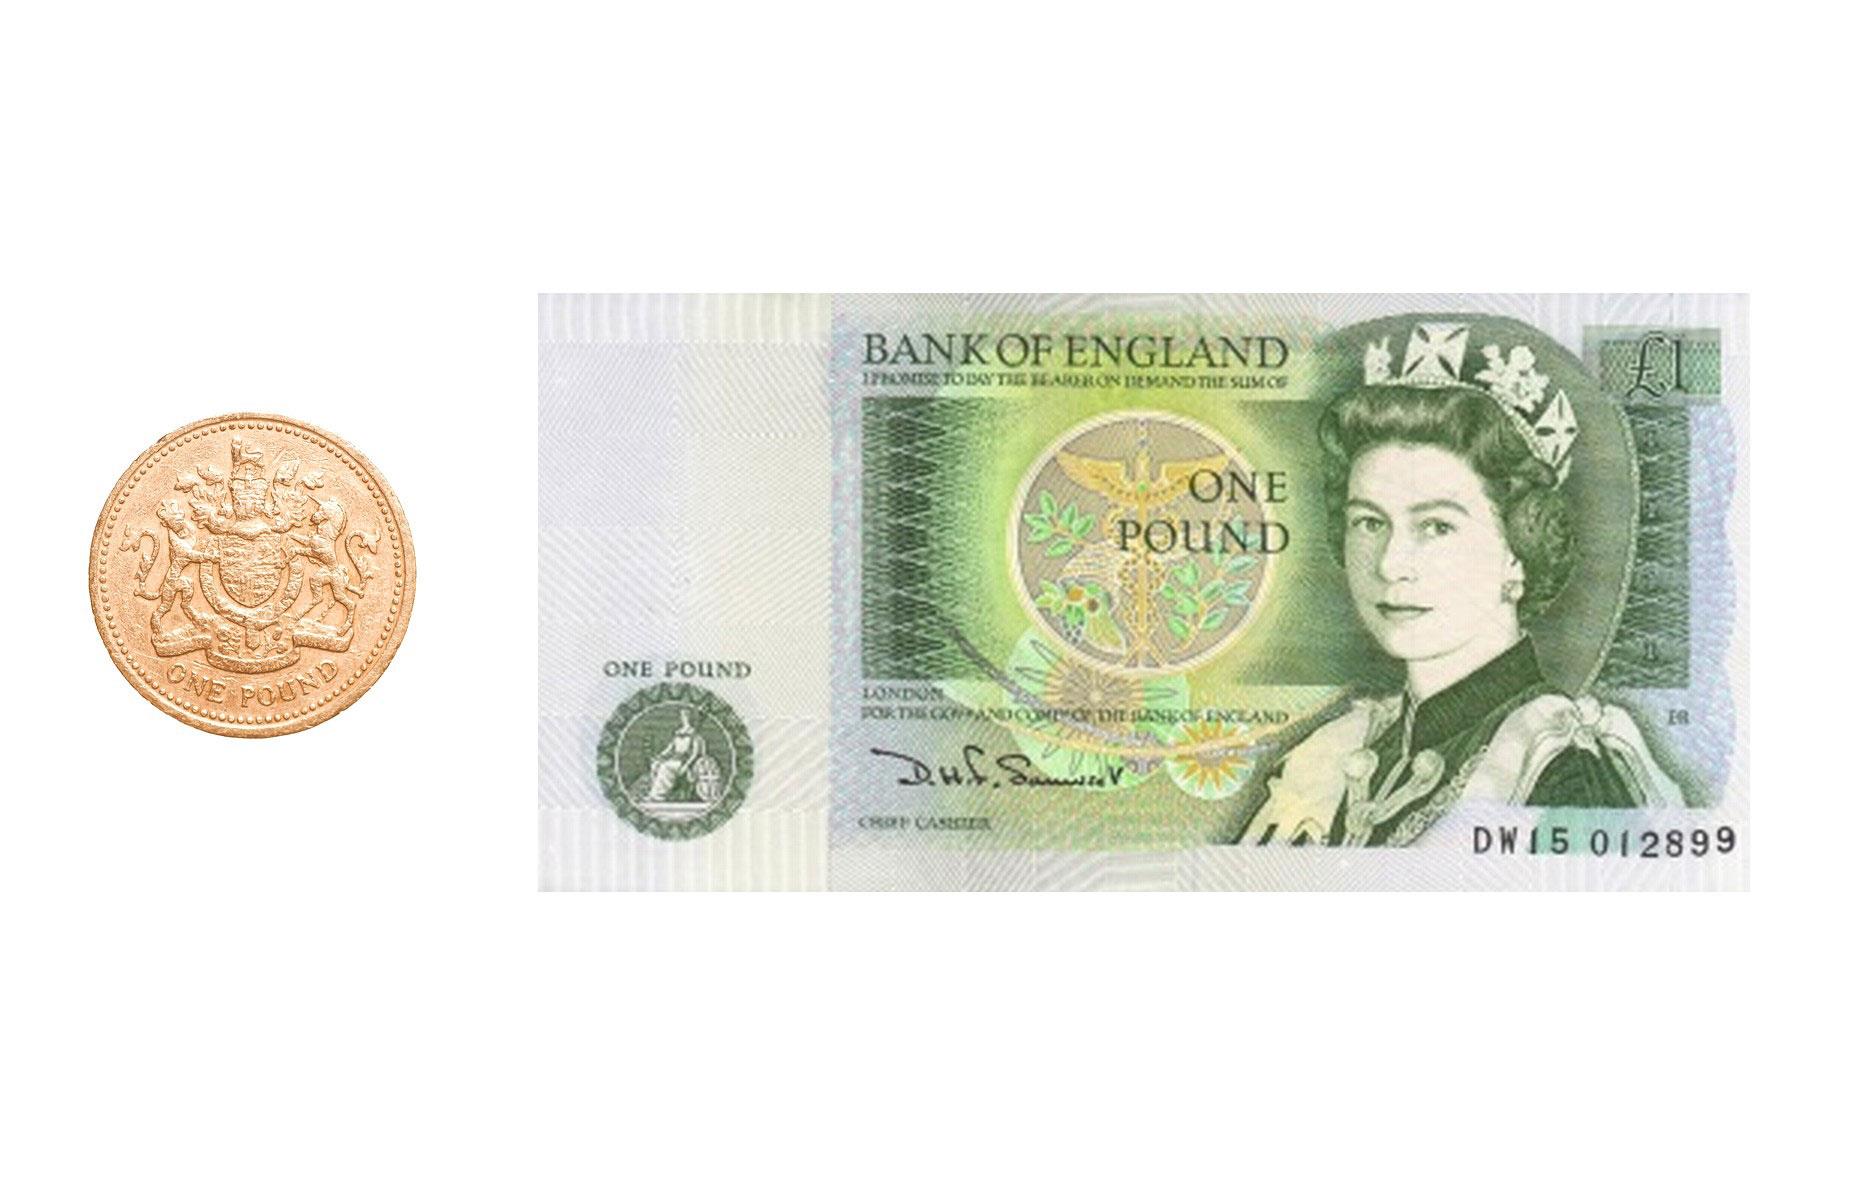 £1 coin introduced